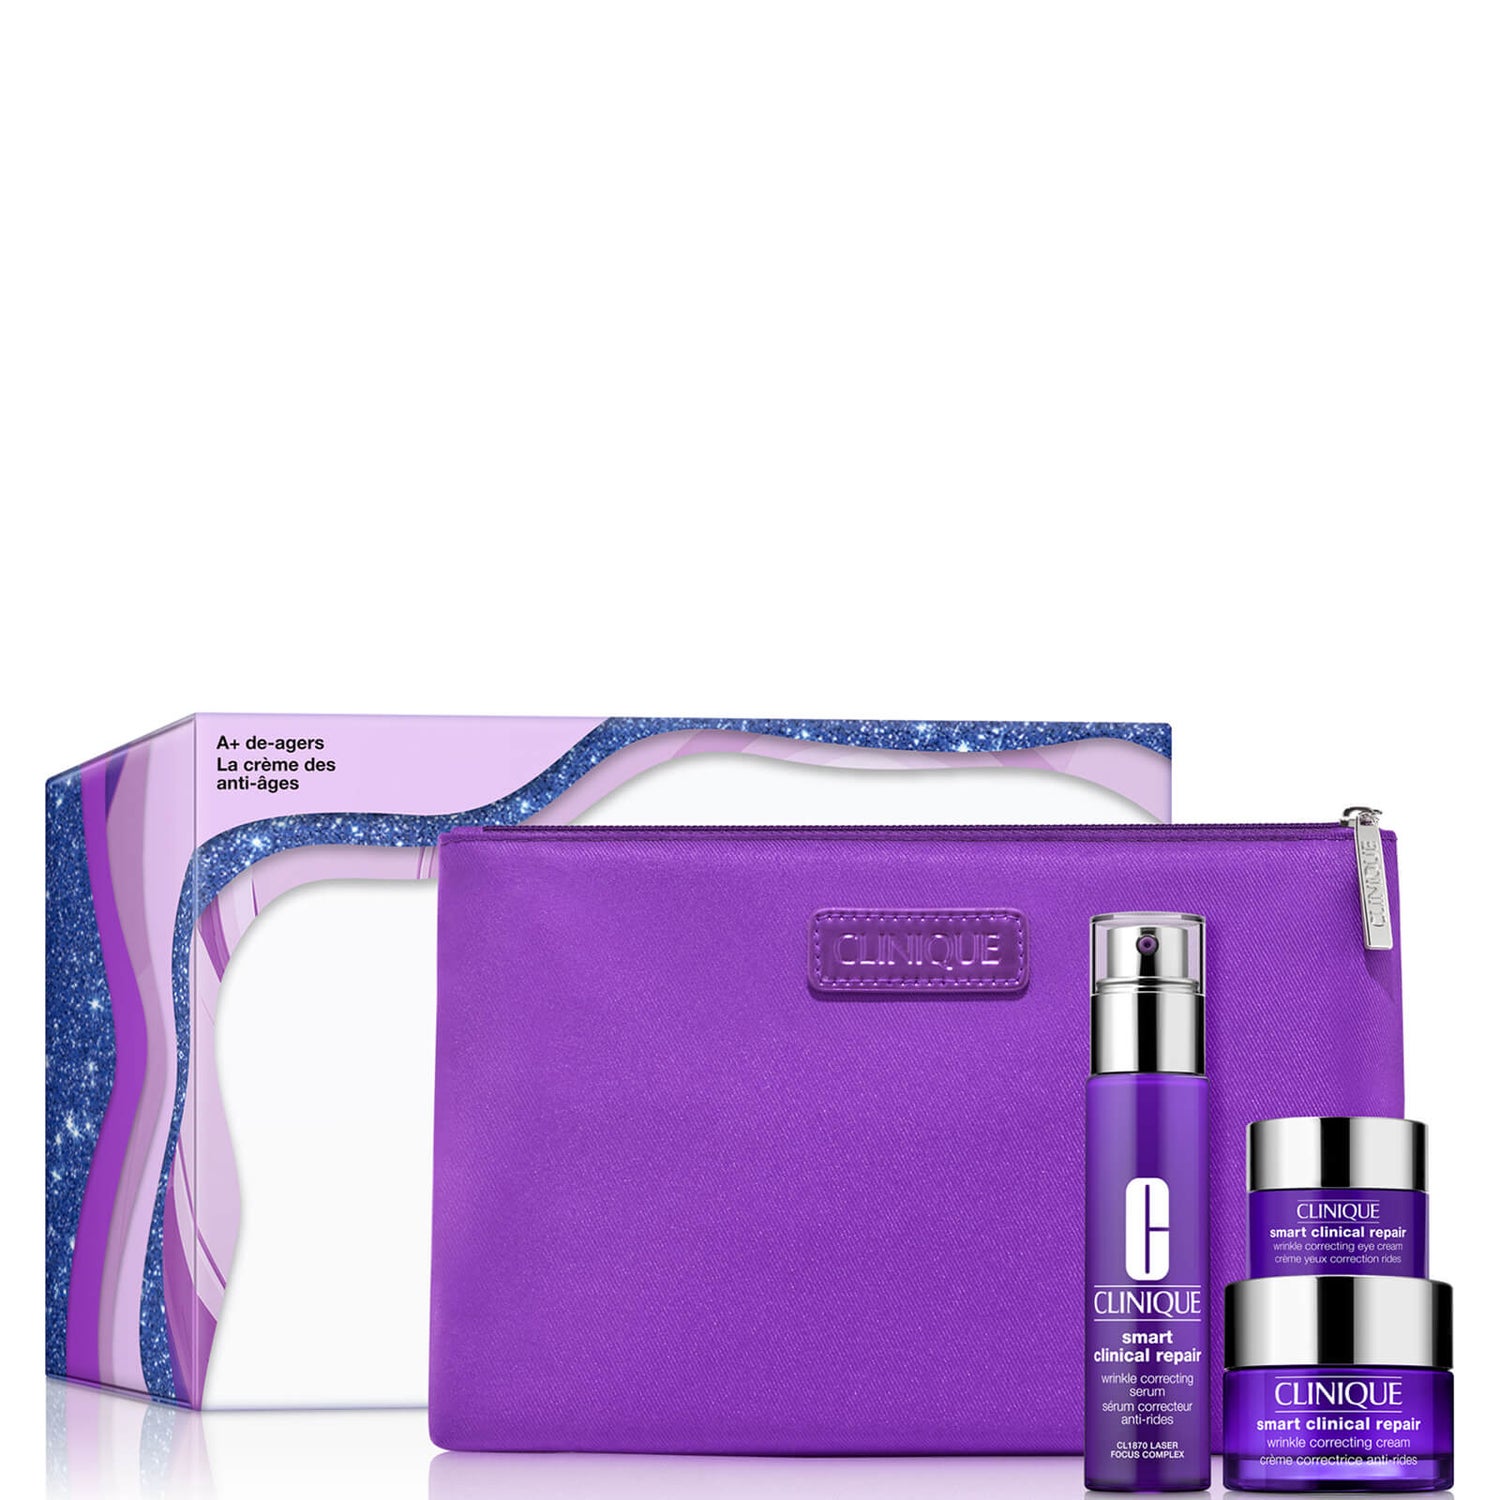 Clinique A+ Anti-Ageing Serum Skincare Gift Set (Worth £96.17)